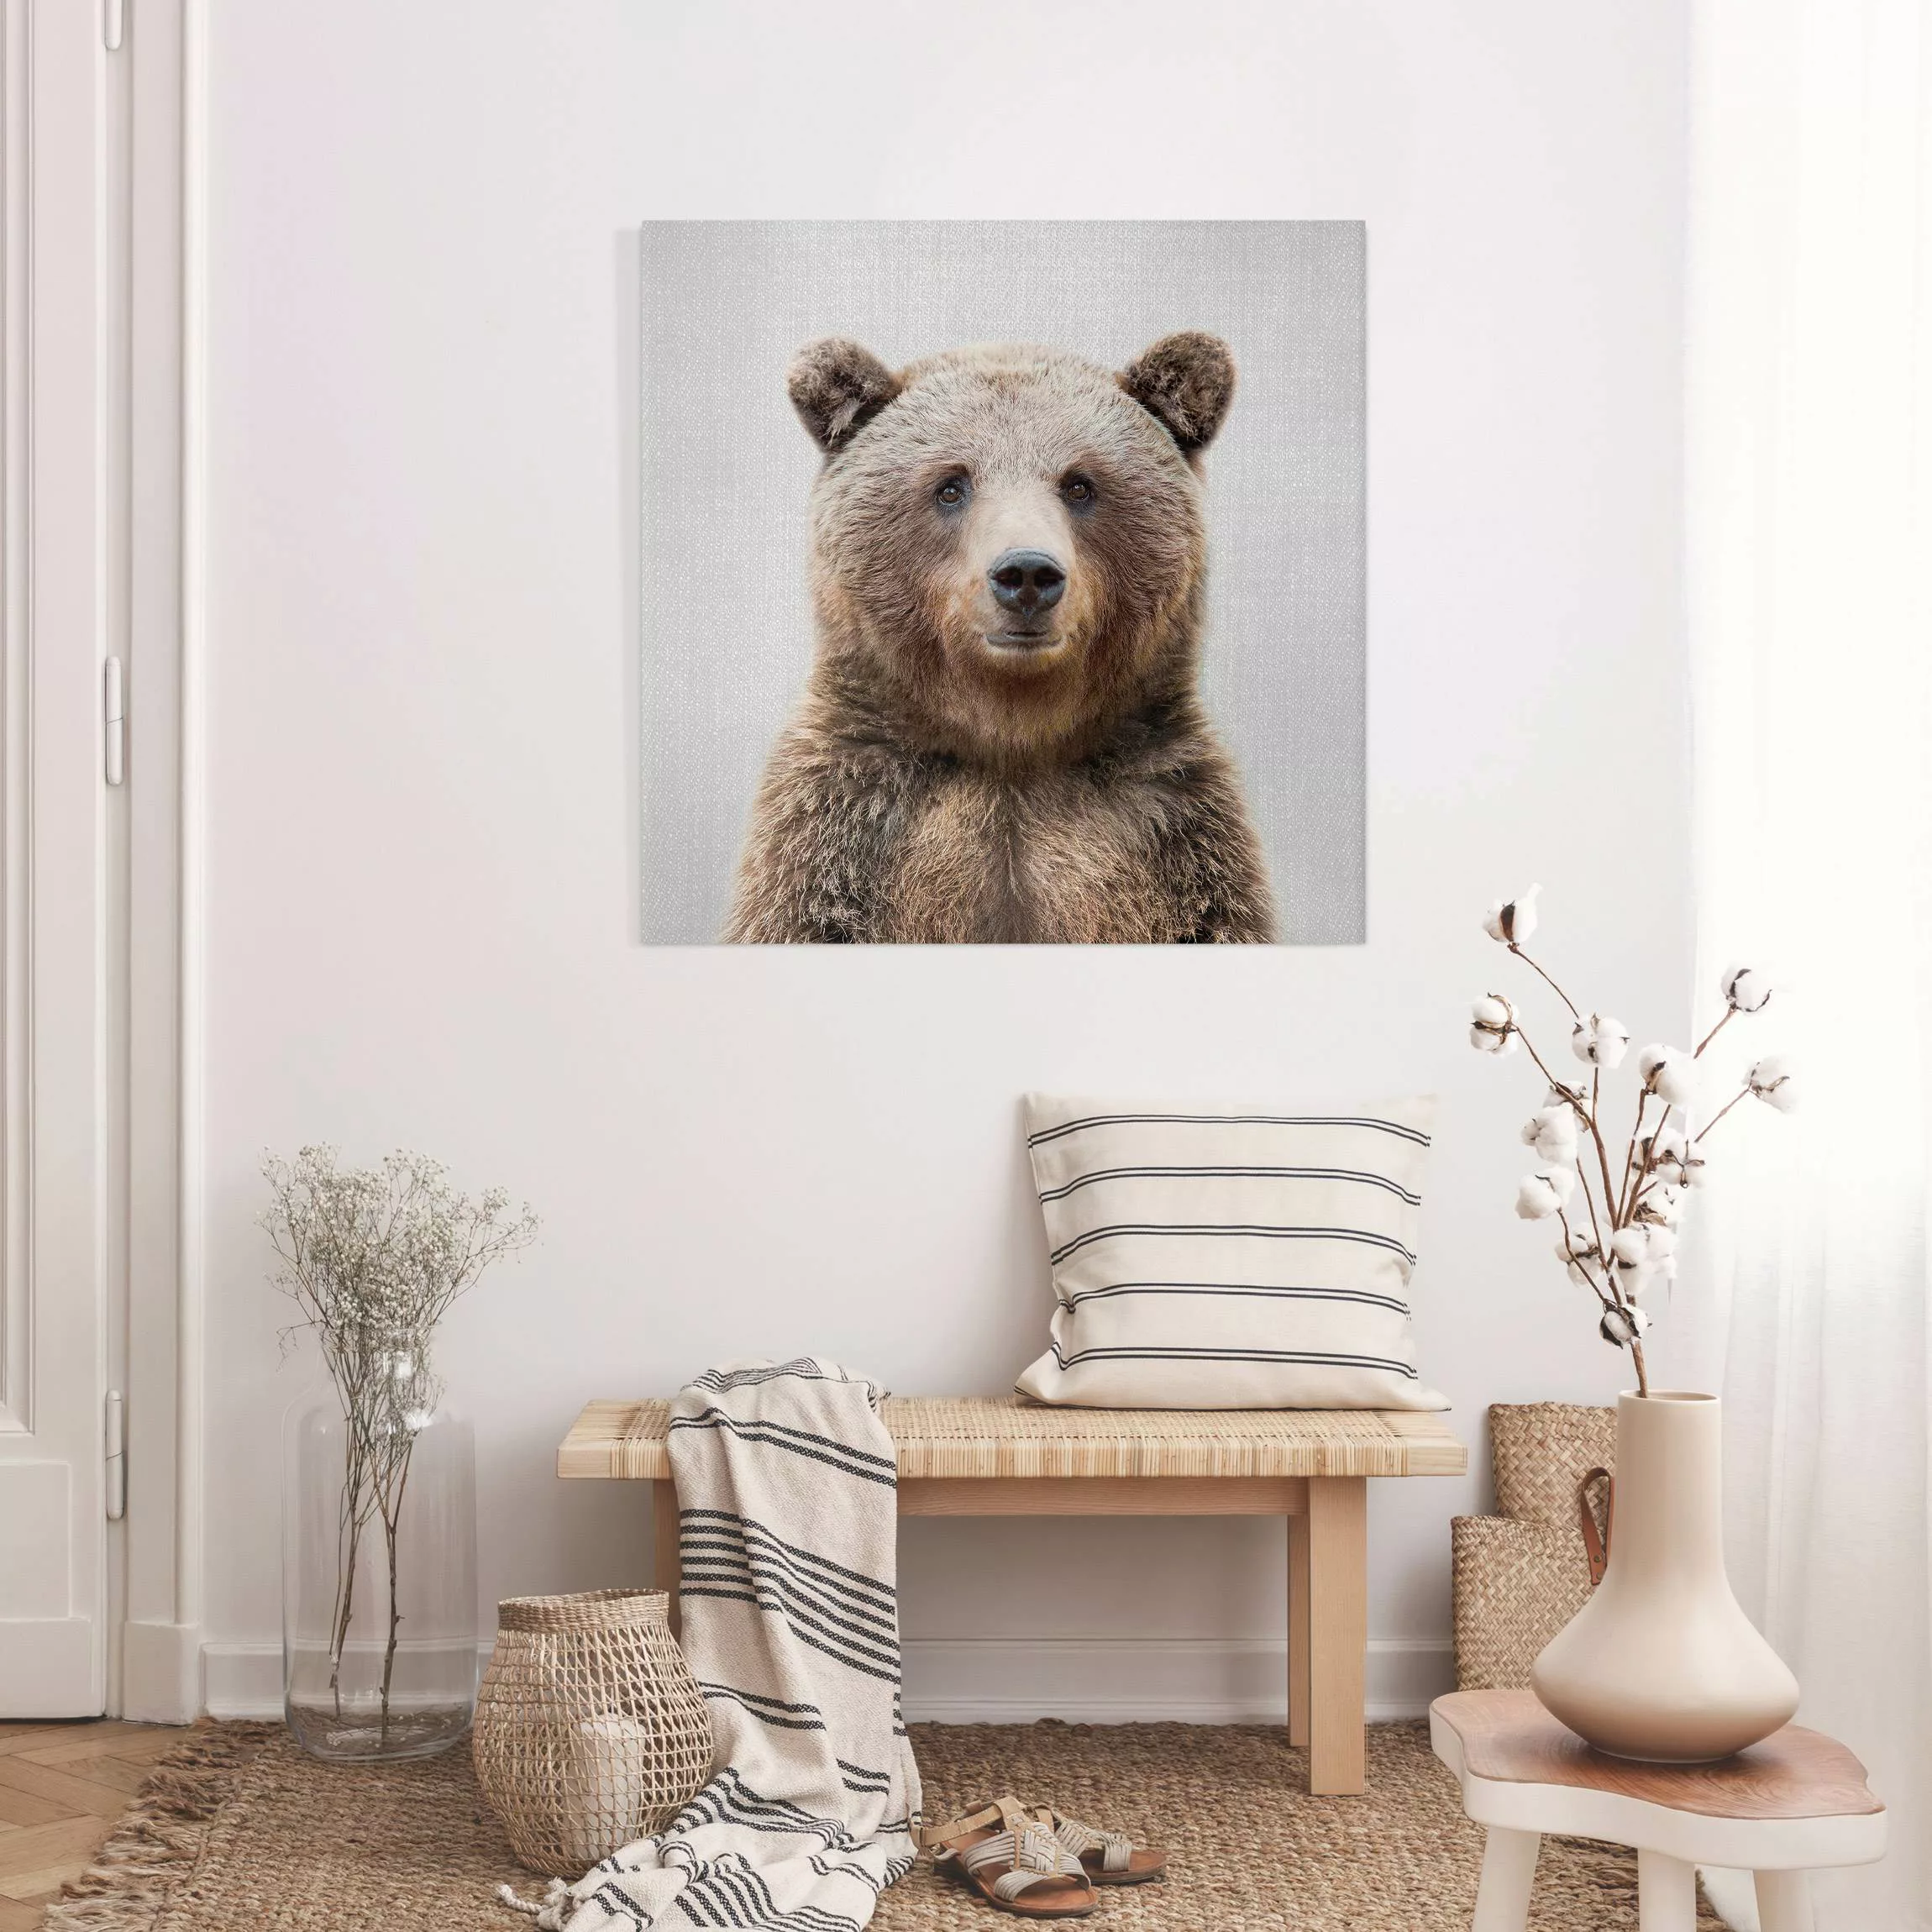 Leinwandbild Grizzlybär Gustel günstig online kaufen